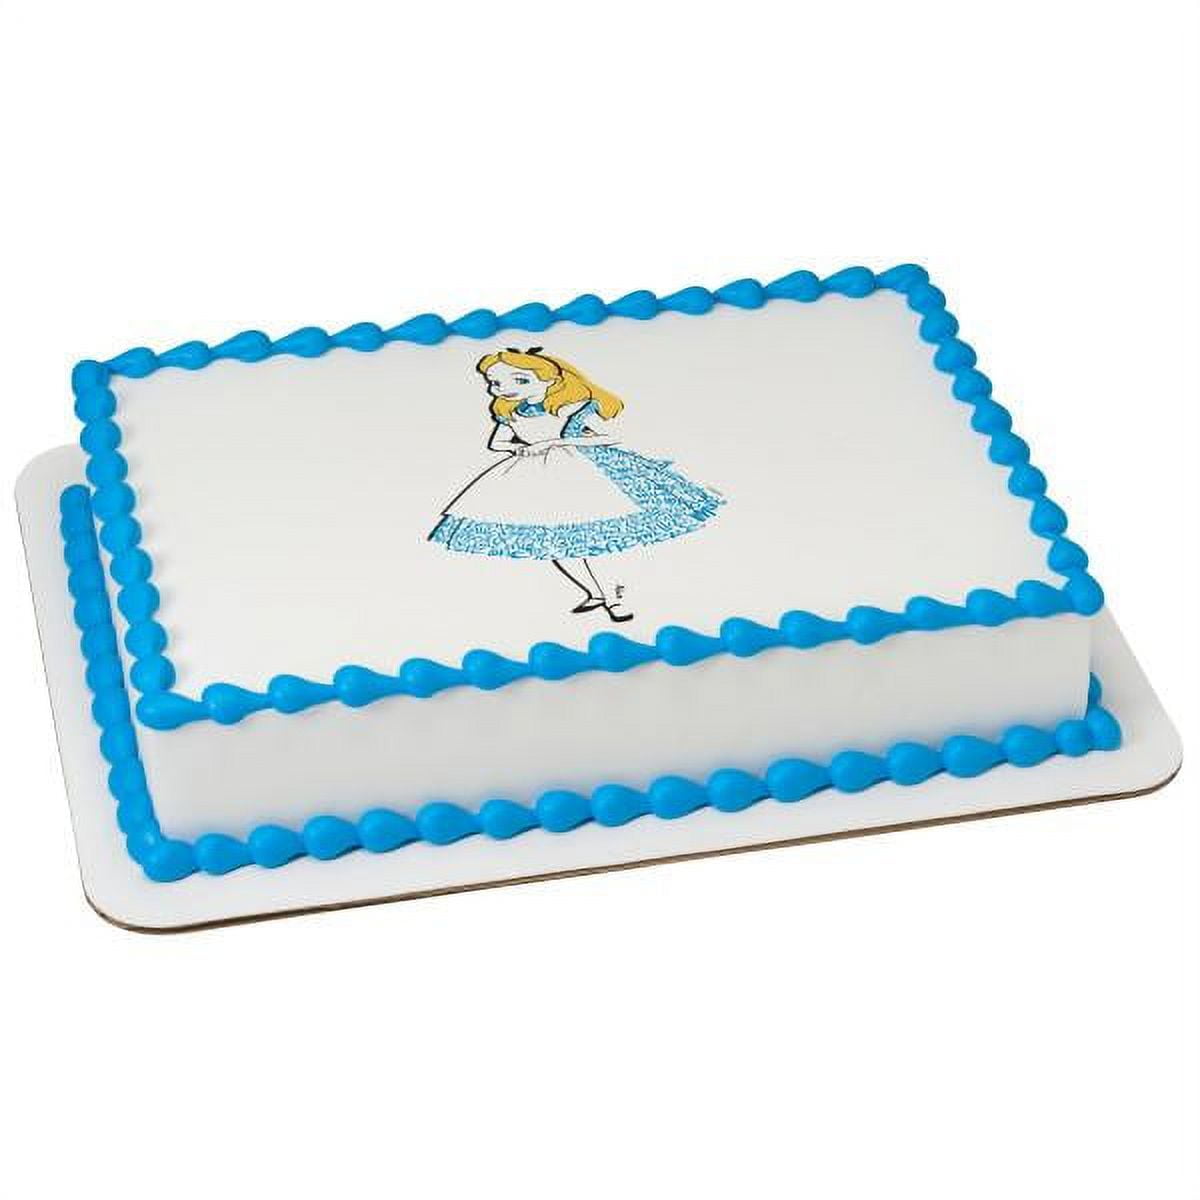 Alice in Wonderland Birthday Party Ideas, Photo 1 of 36